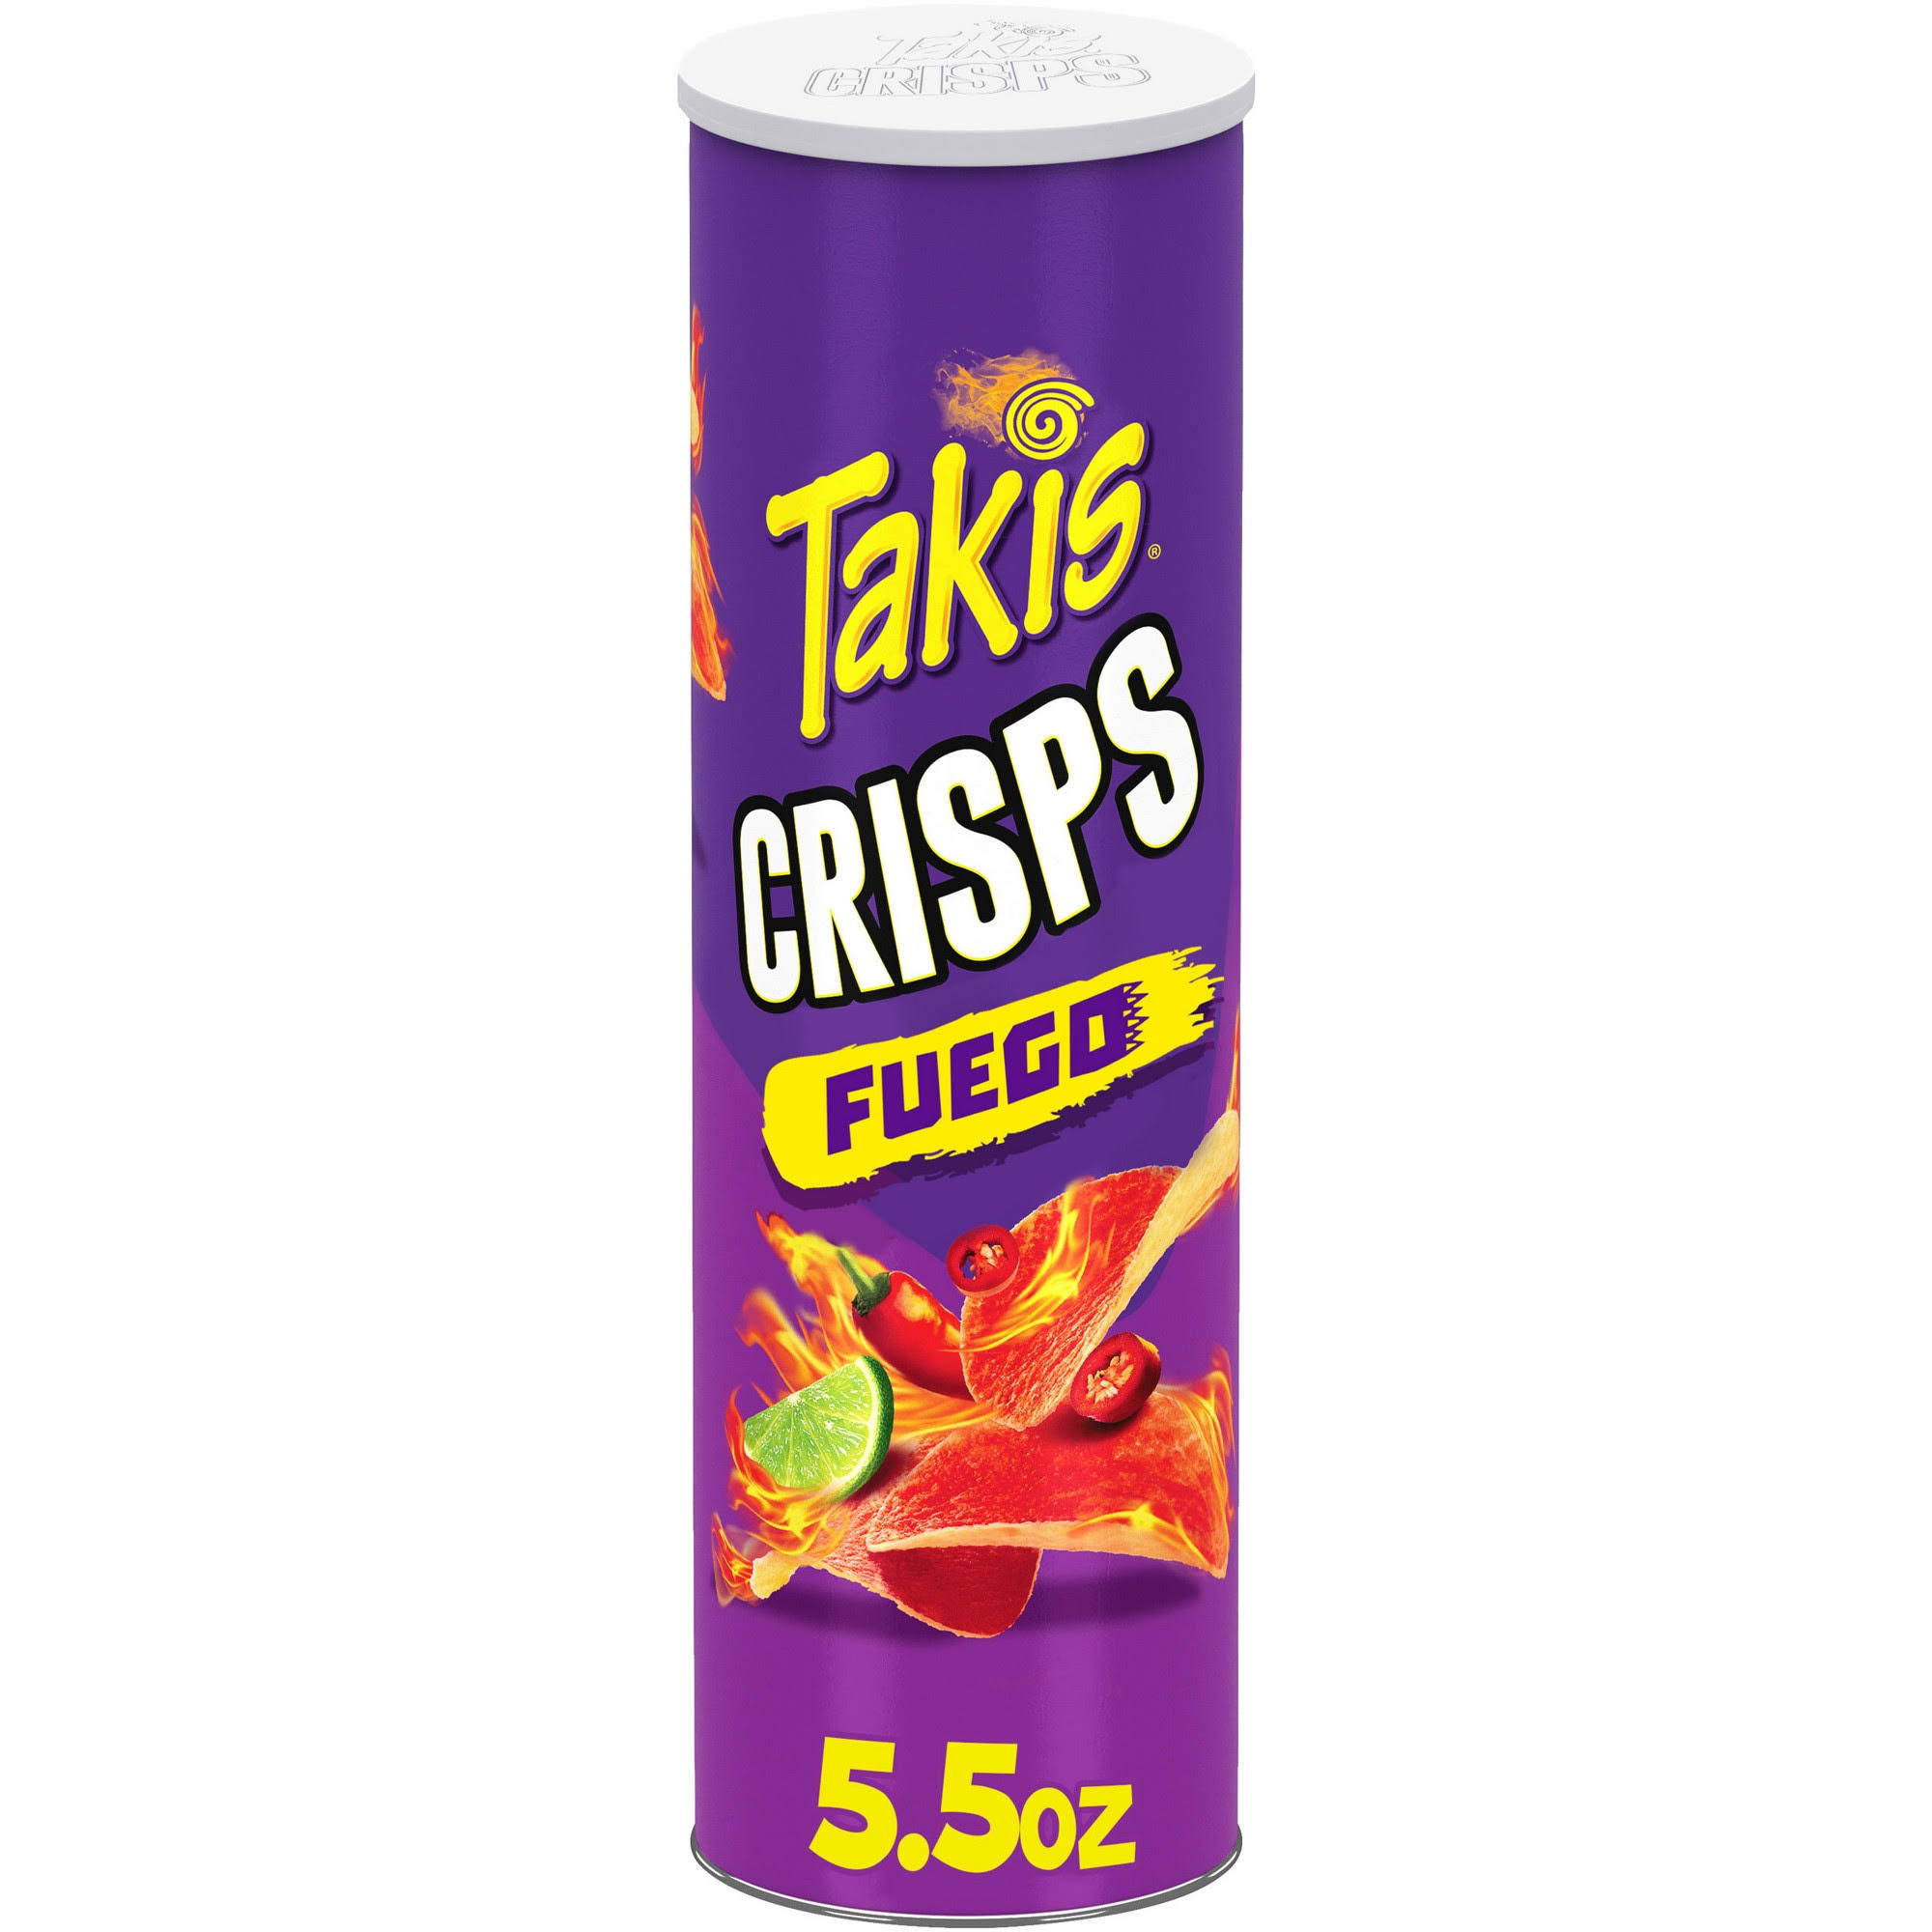 Takis Crisps Fuego Flavor Canister 5.5oz